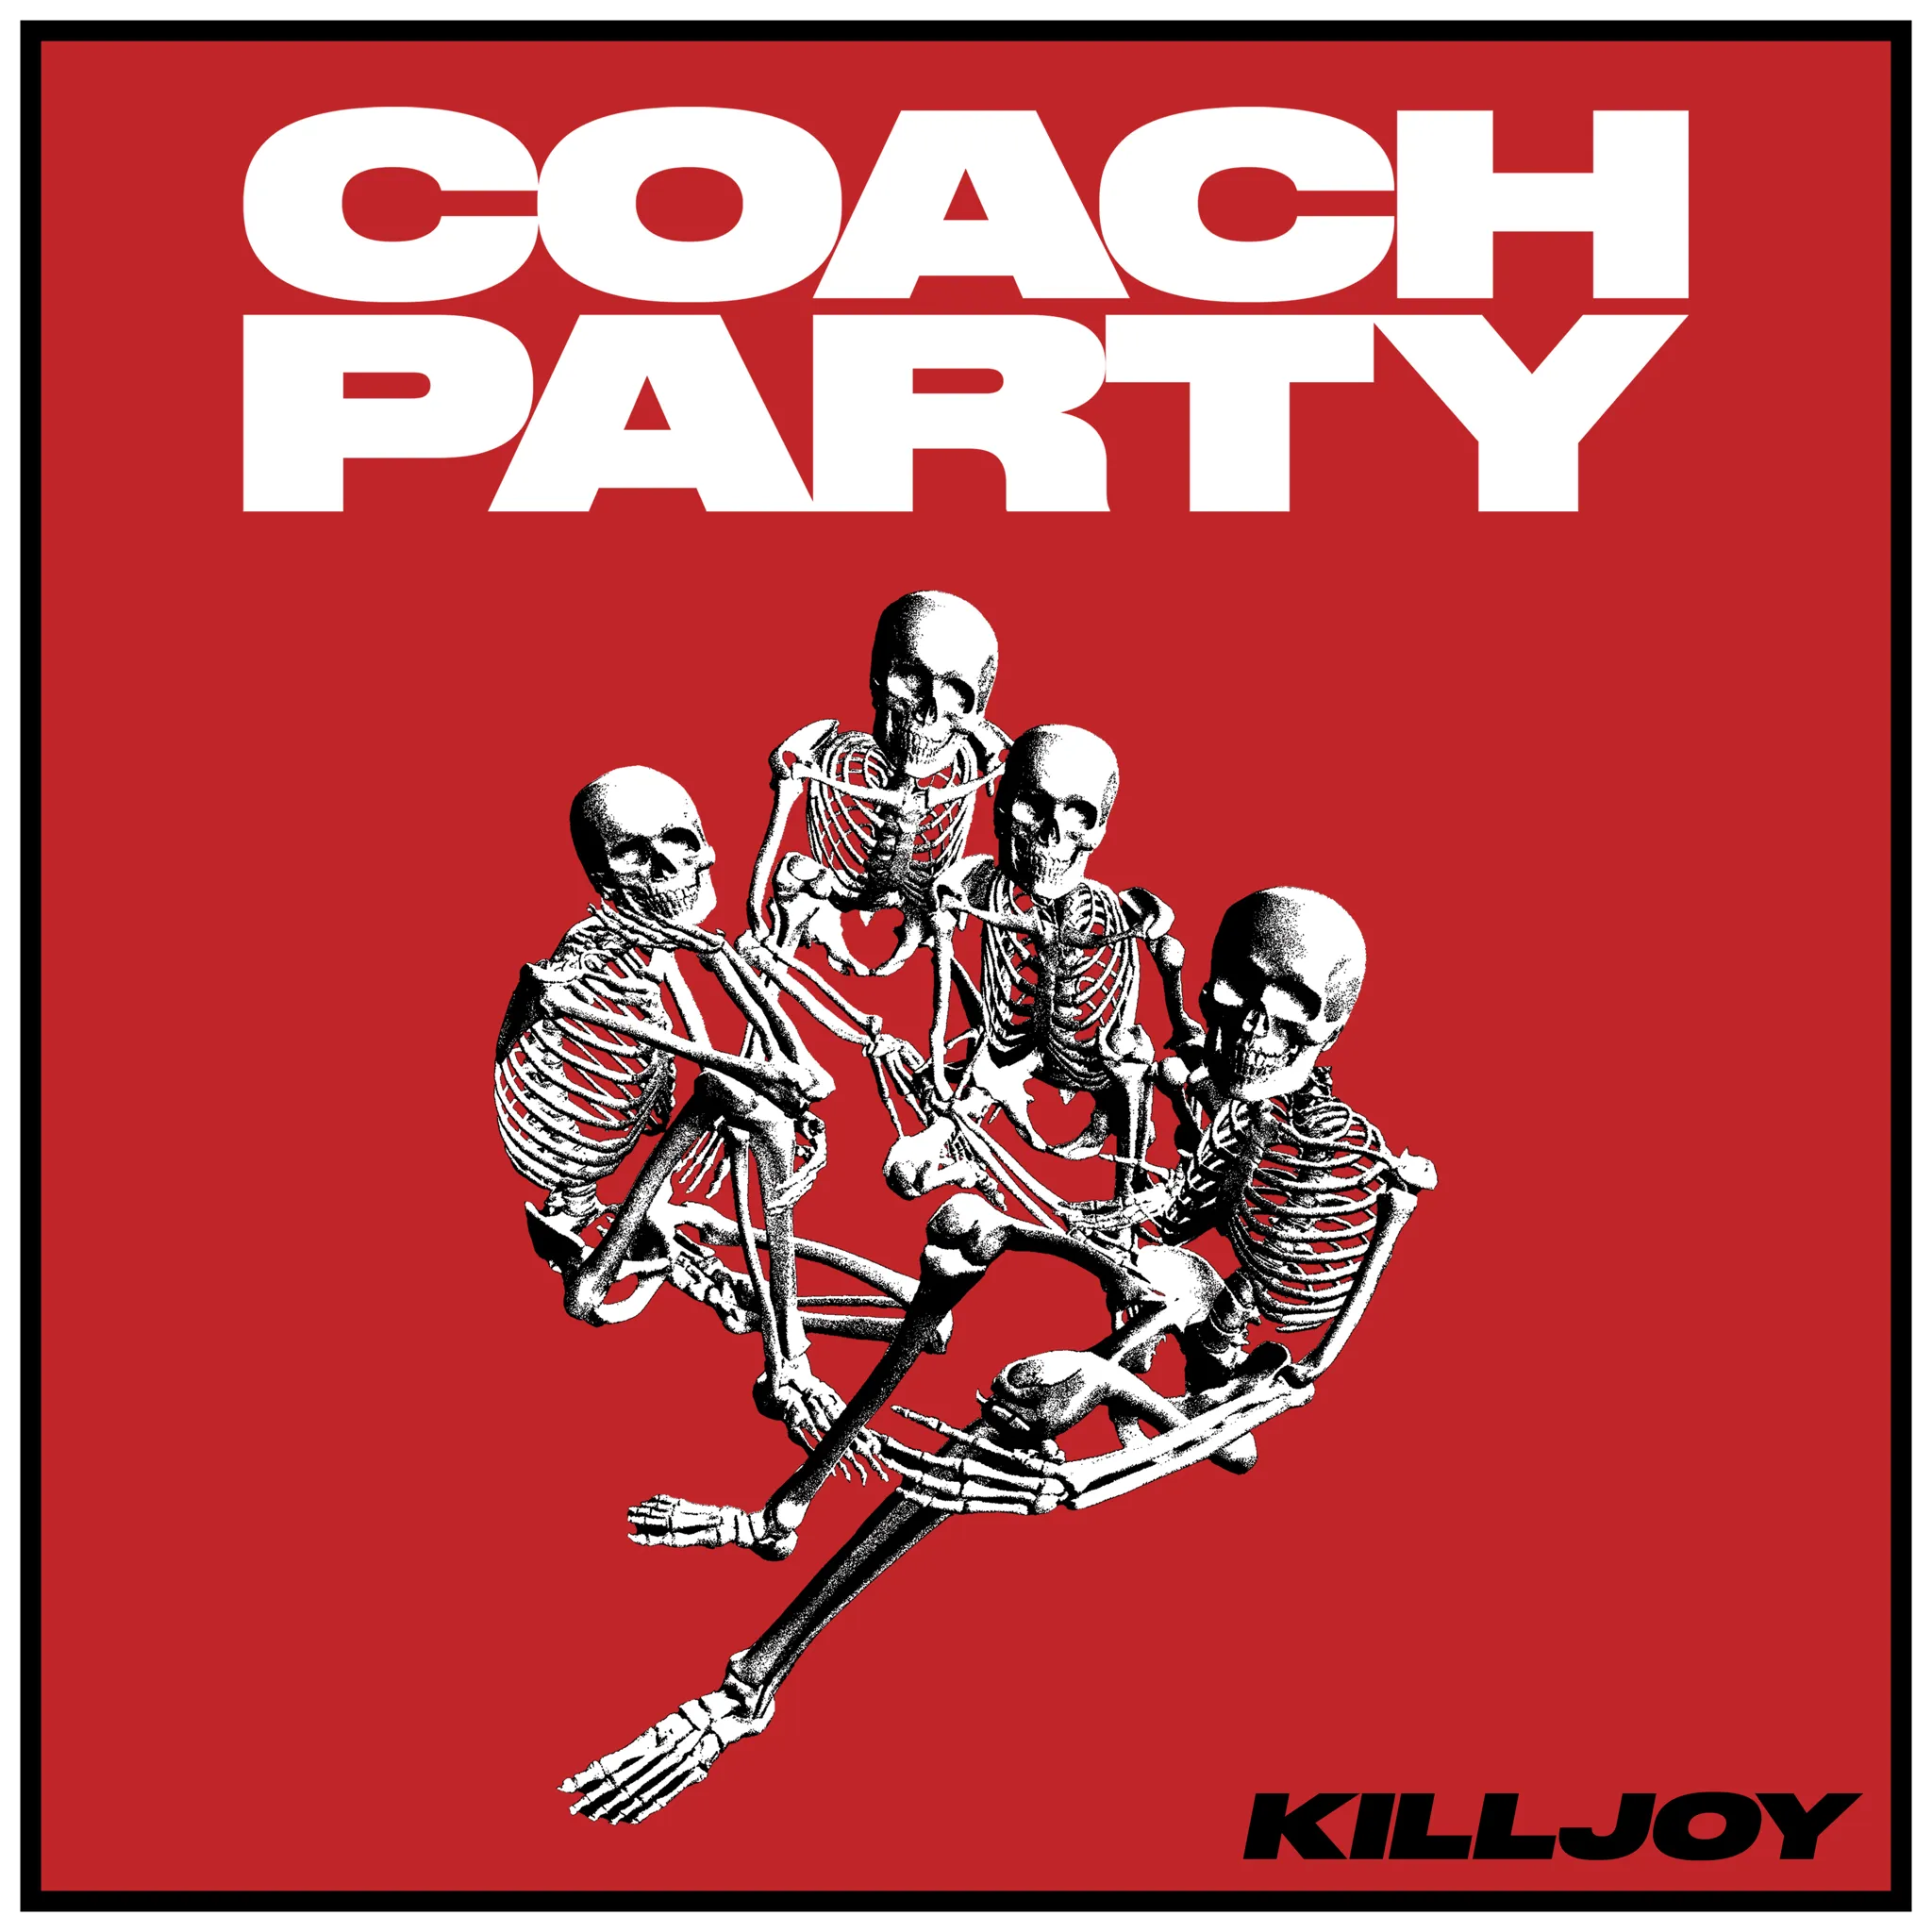 <strong>Coach Party - Killjoy</strong> (Vinyl LP - white)